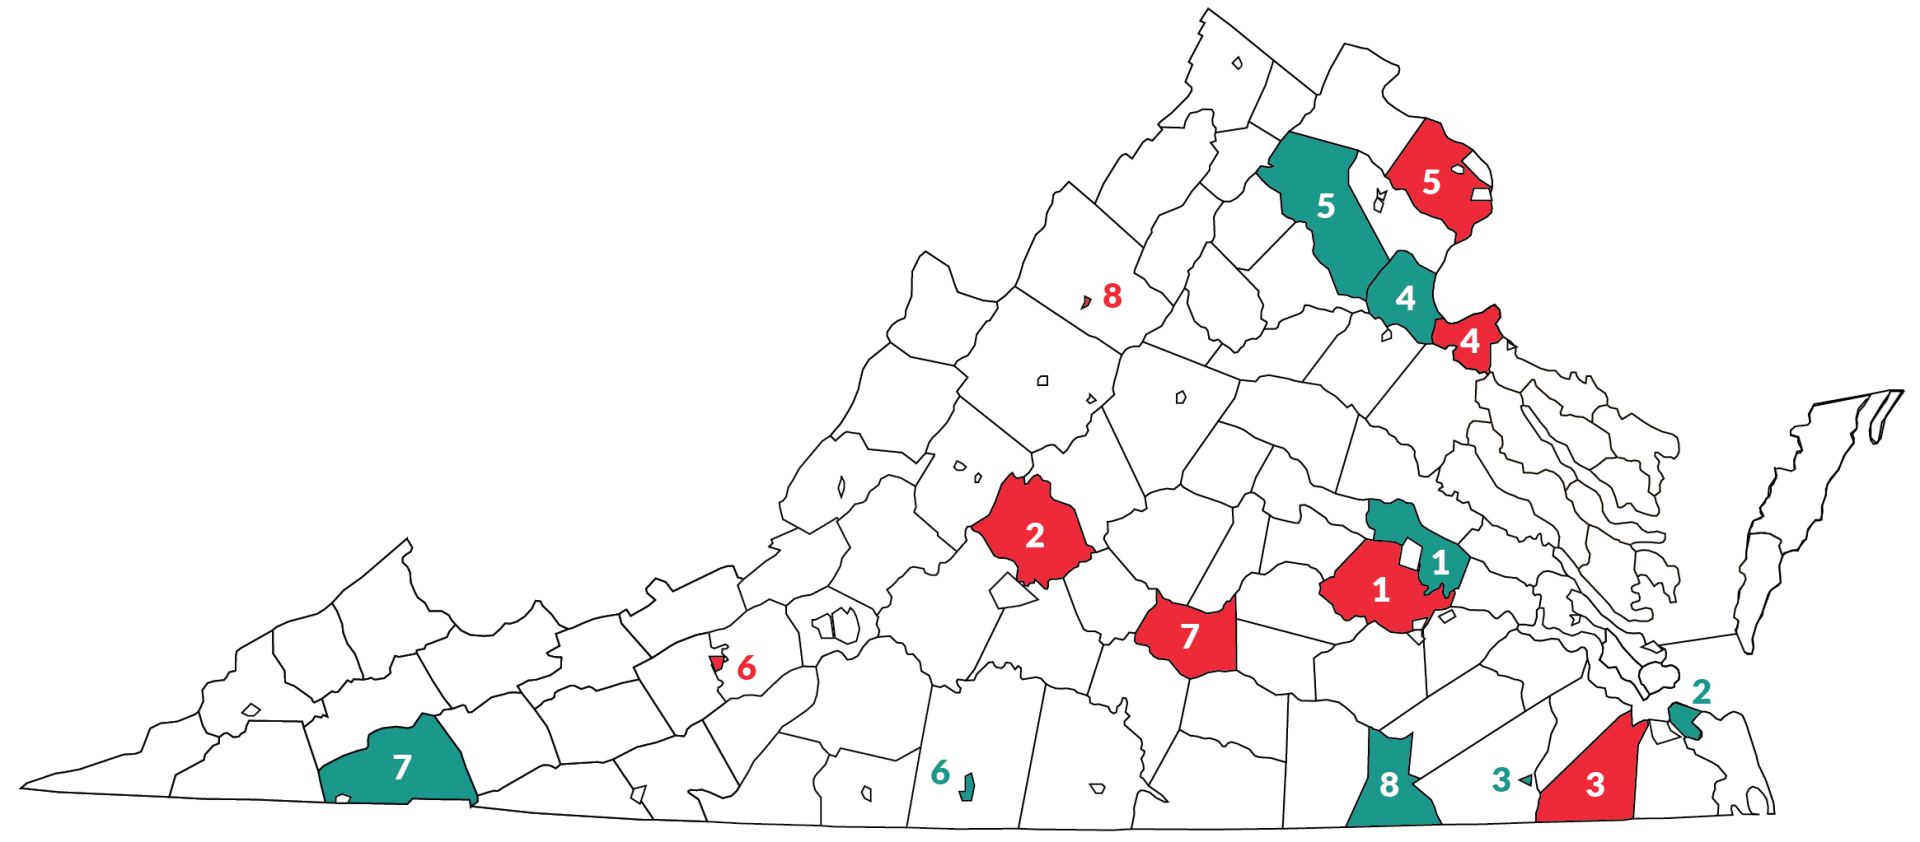 Map Virginia showing location of VFVK cohorts 